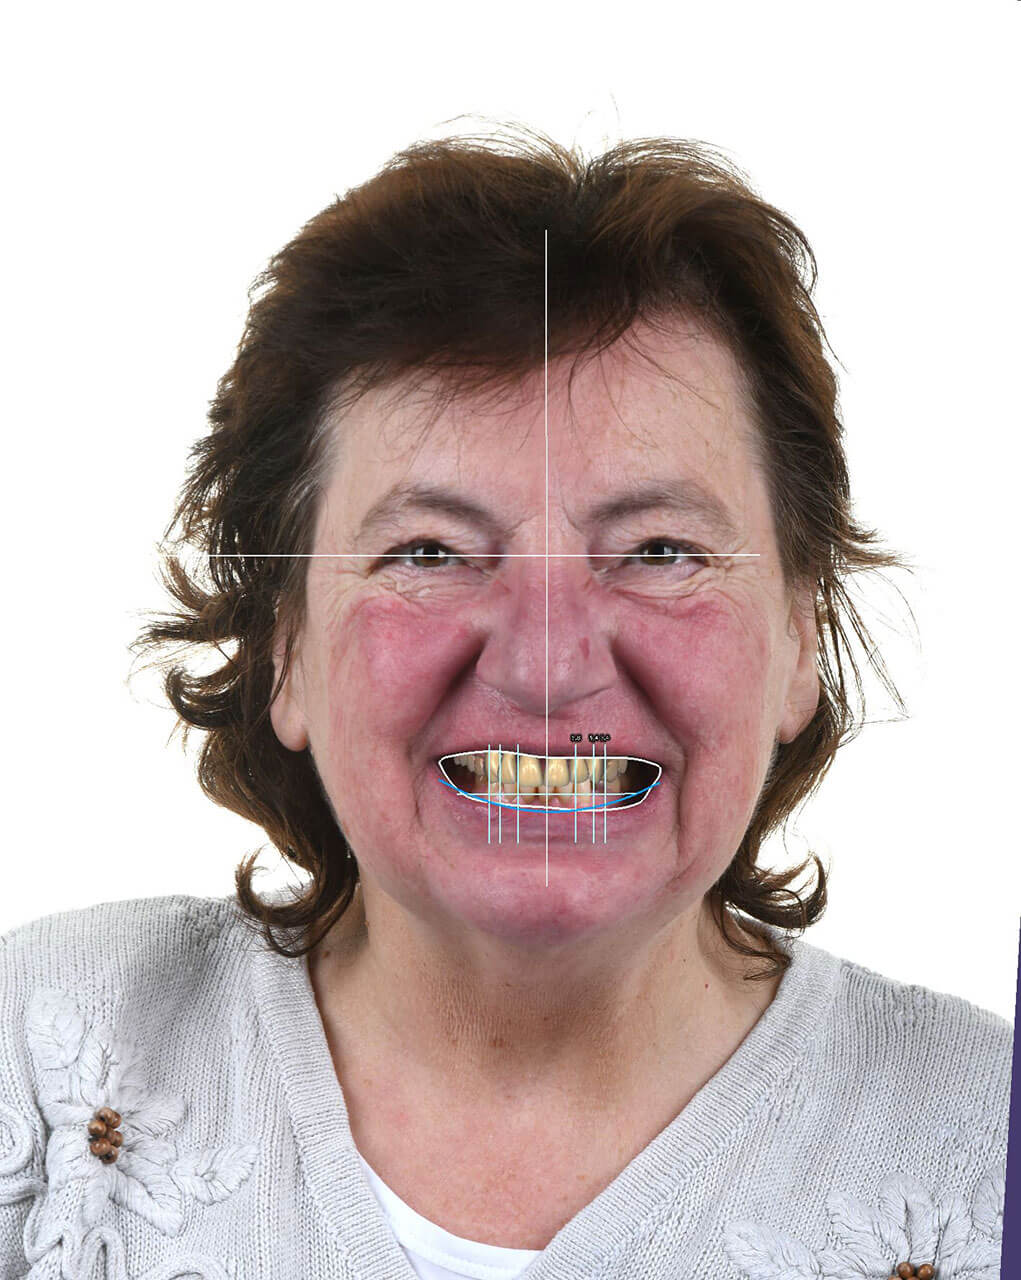 Abb. 3 2-D-Patientenfoto für das Smile Design mit Smile Creator.